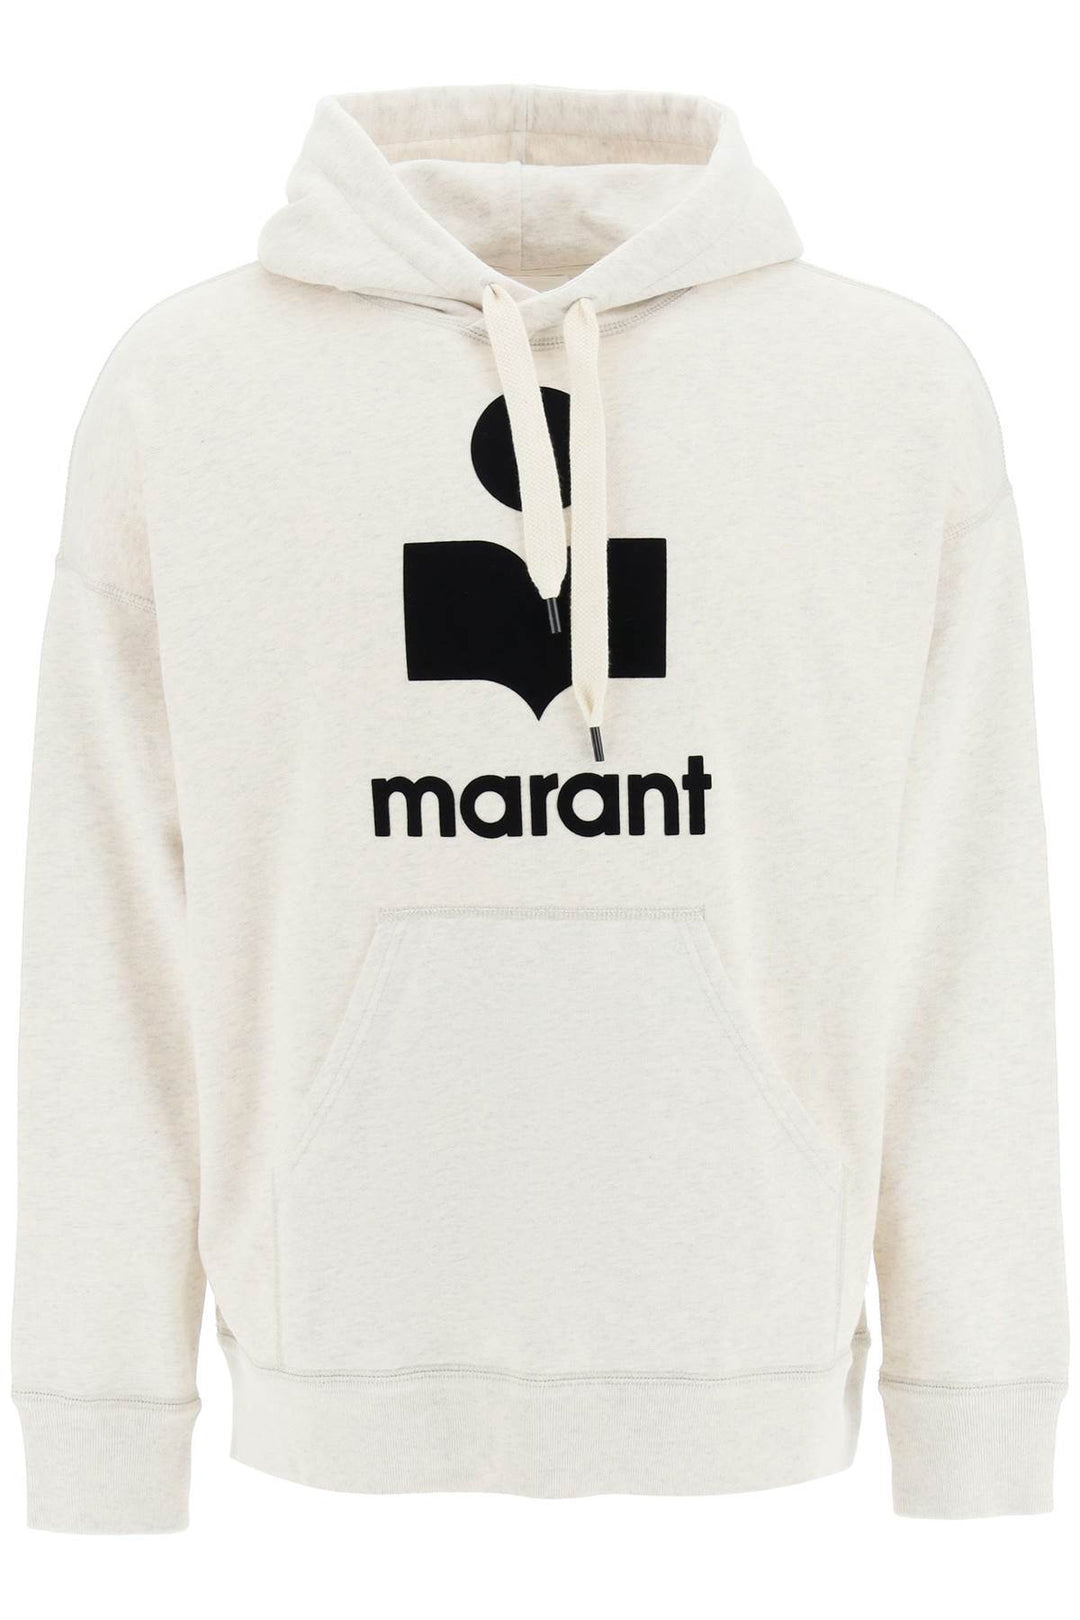 Marant 'miley' hoodie with flocked logo-0